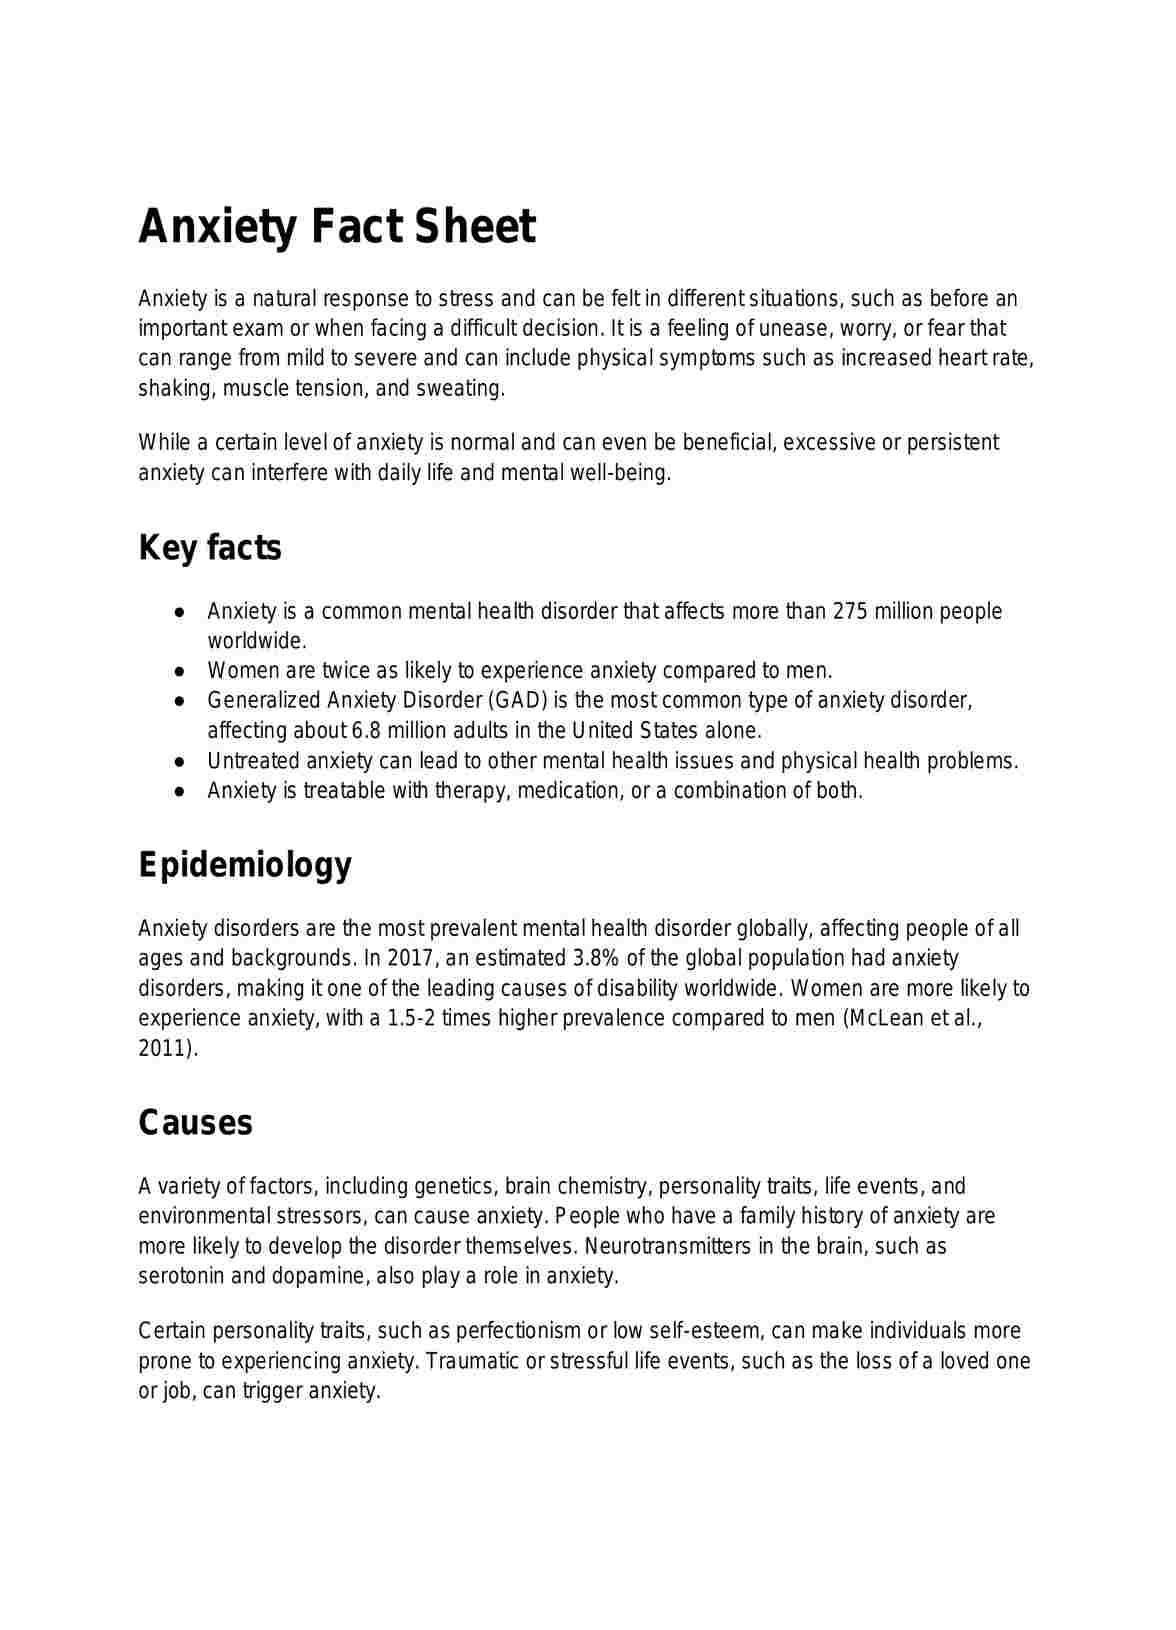 Anxiety Fact Sheet PDF Example